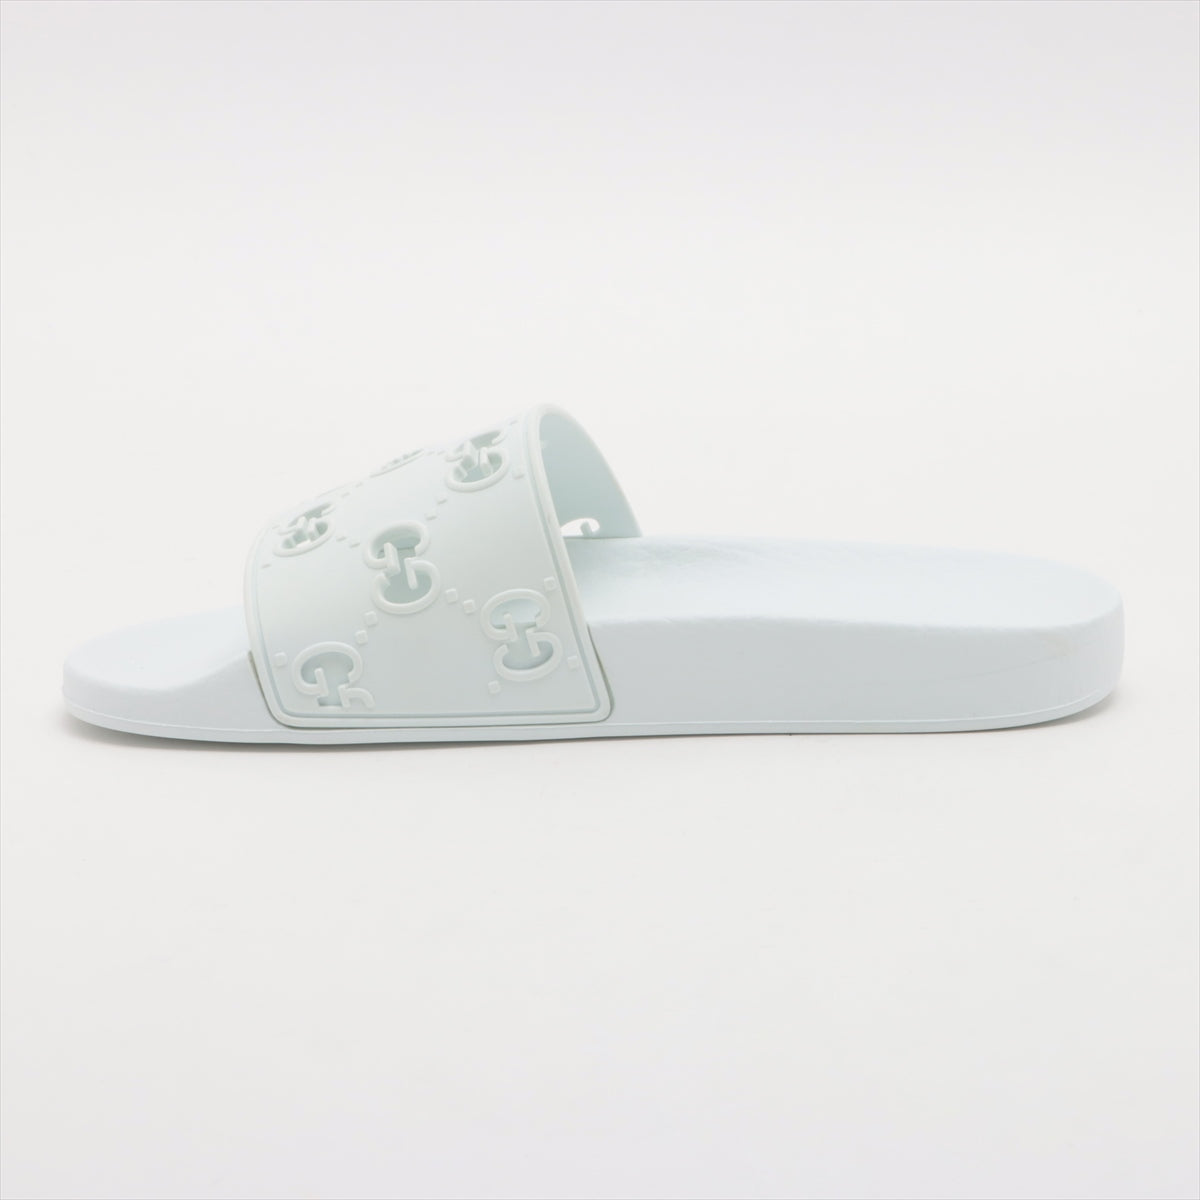 Gucci GG pattern Rubber Sandals 36 Ladies' White 573922